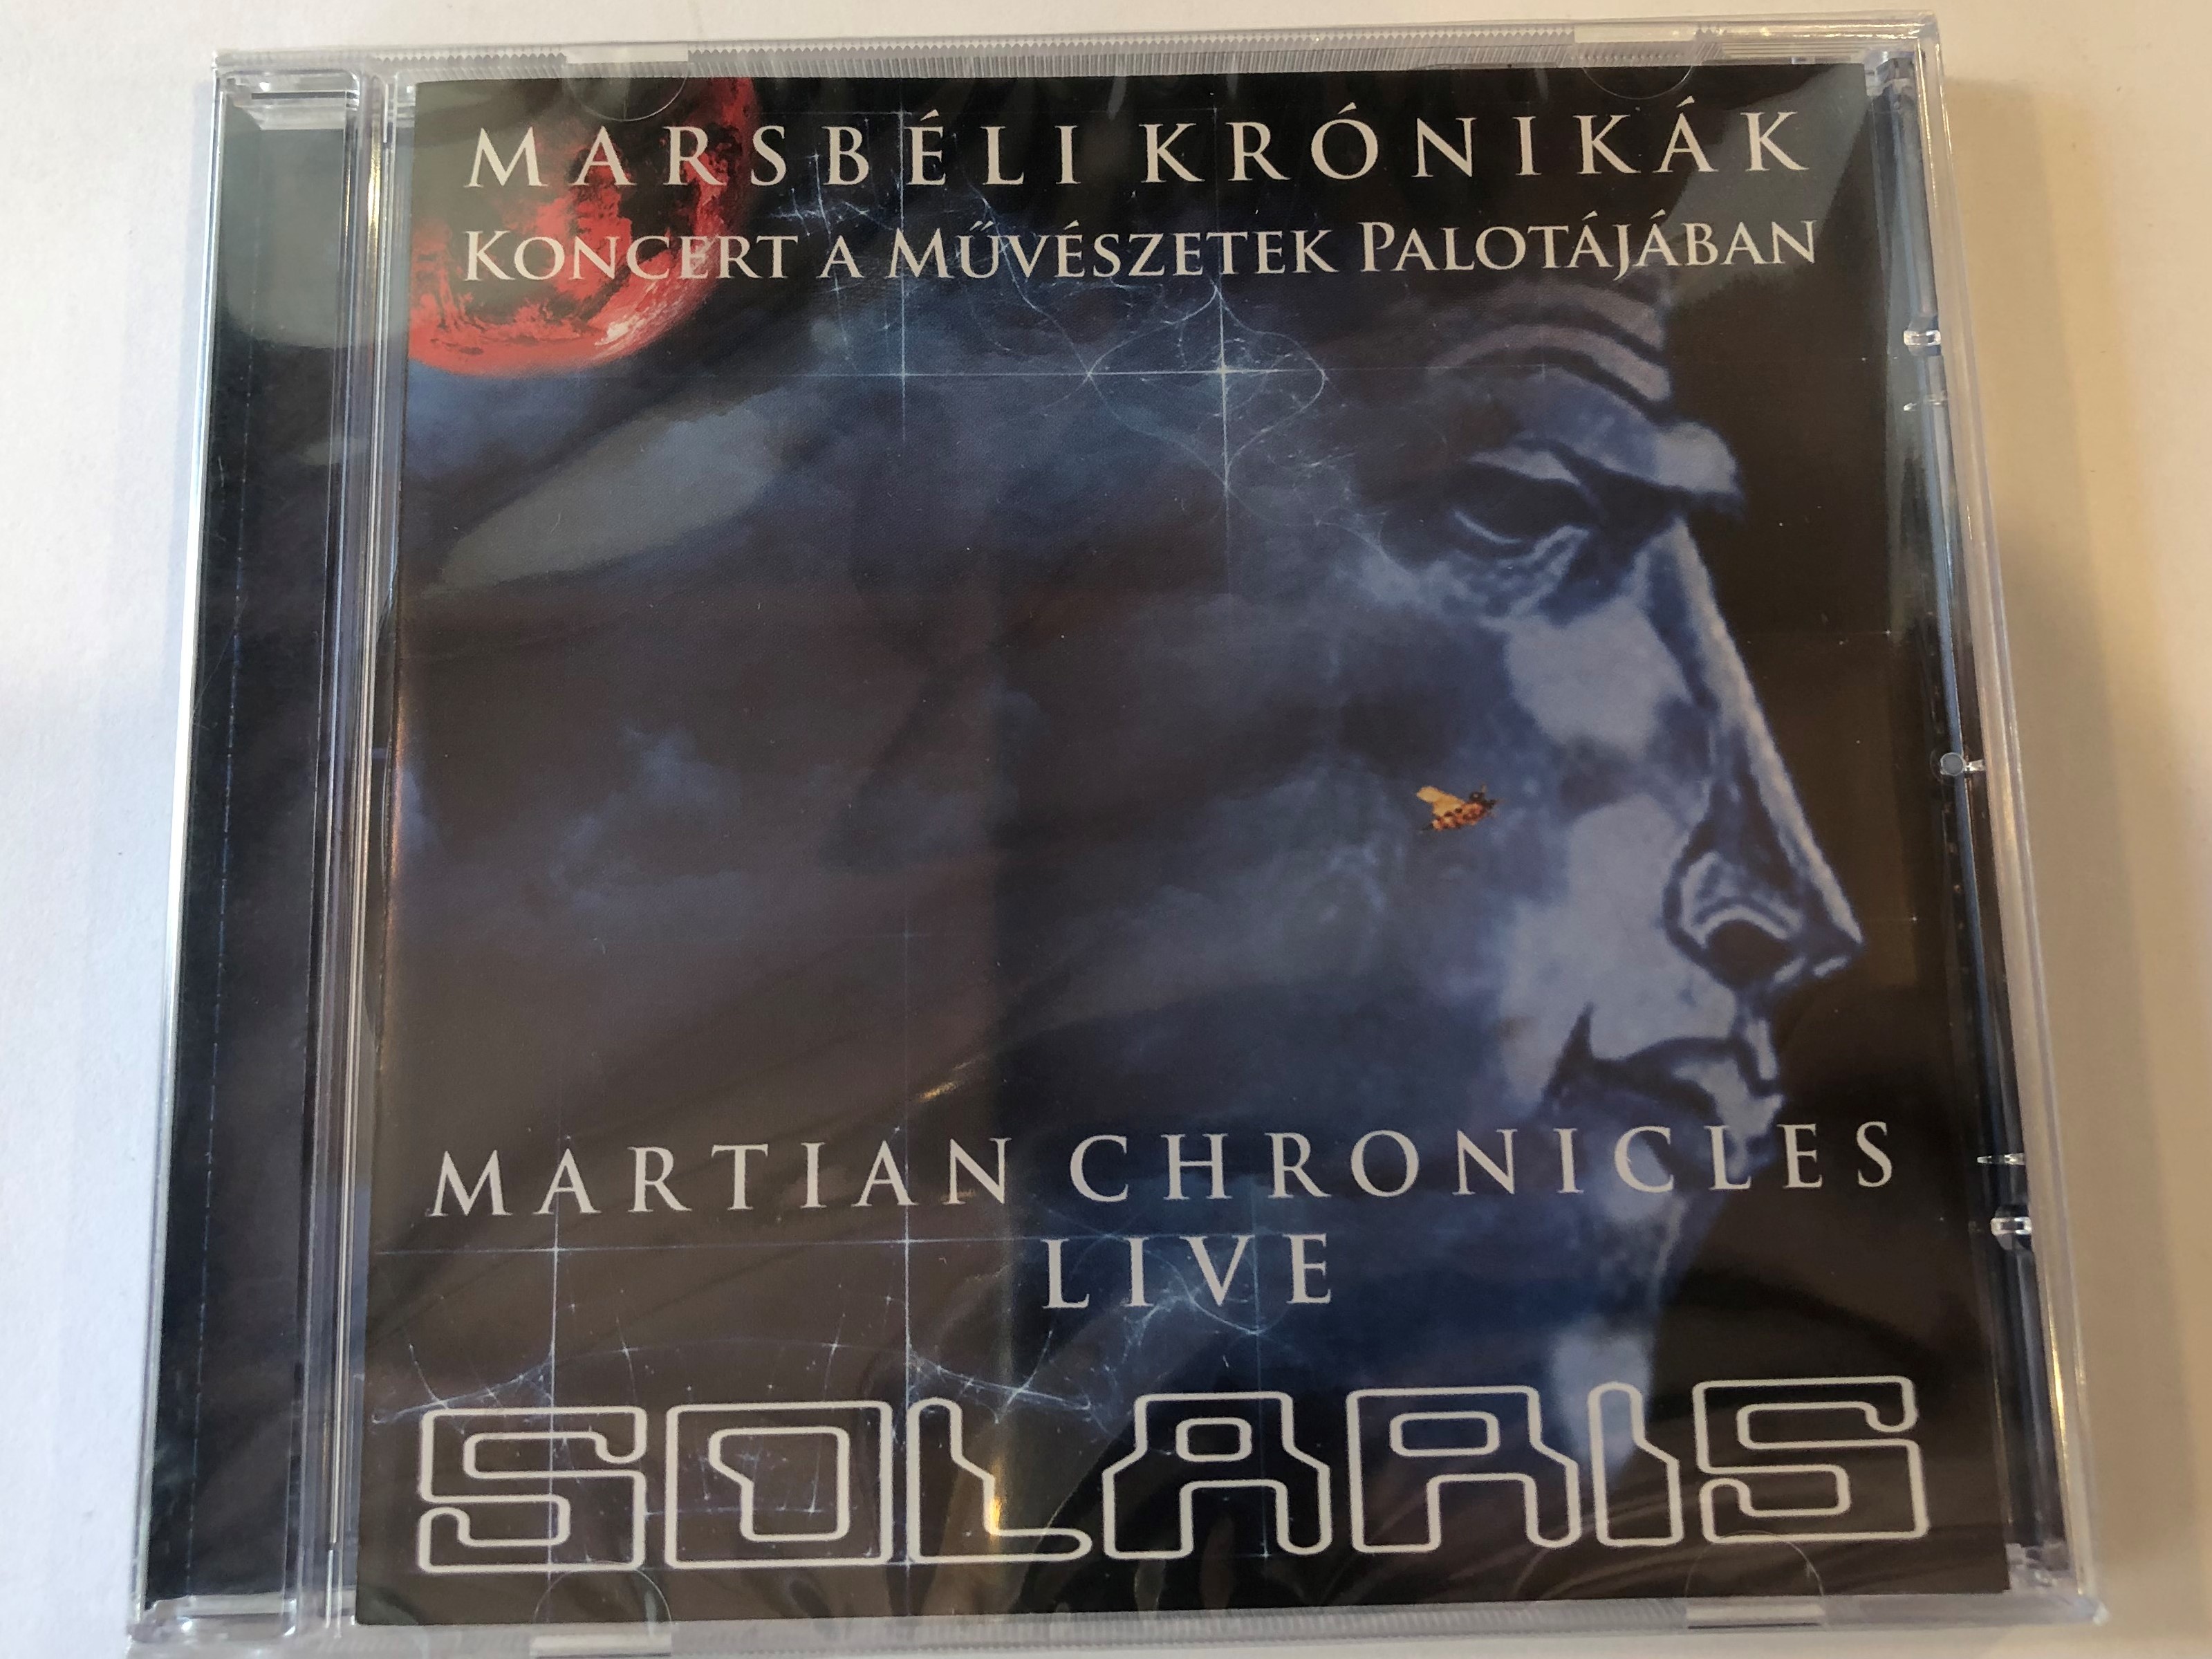 marsb-li-kr-nik-k-koncert-a-muveszetek-palotajaban-martian-chronicles-live-solaris-solaris-music-productions-dvd-cd-5998272703291-1-.jpg